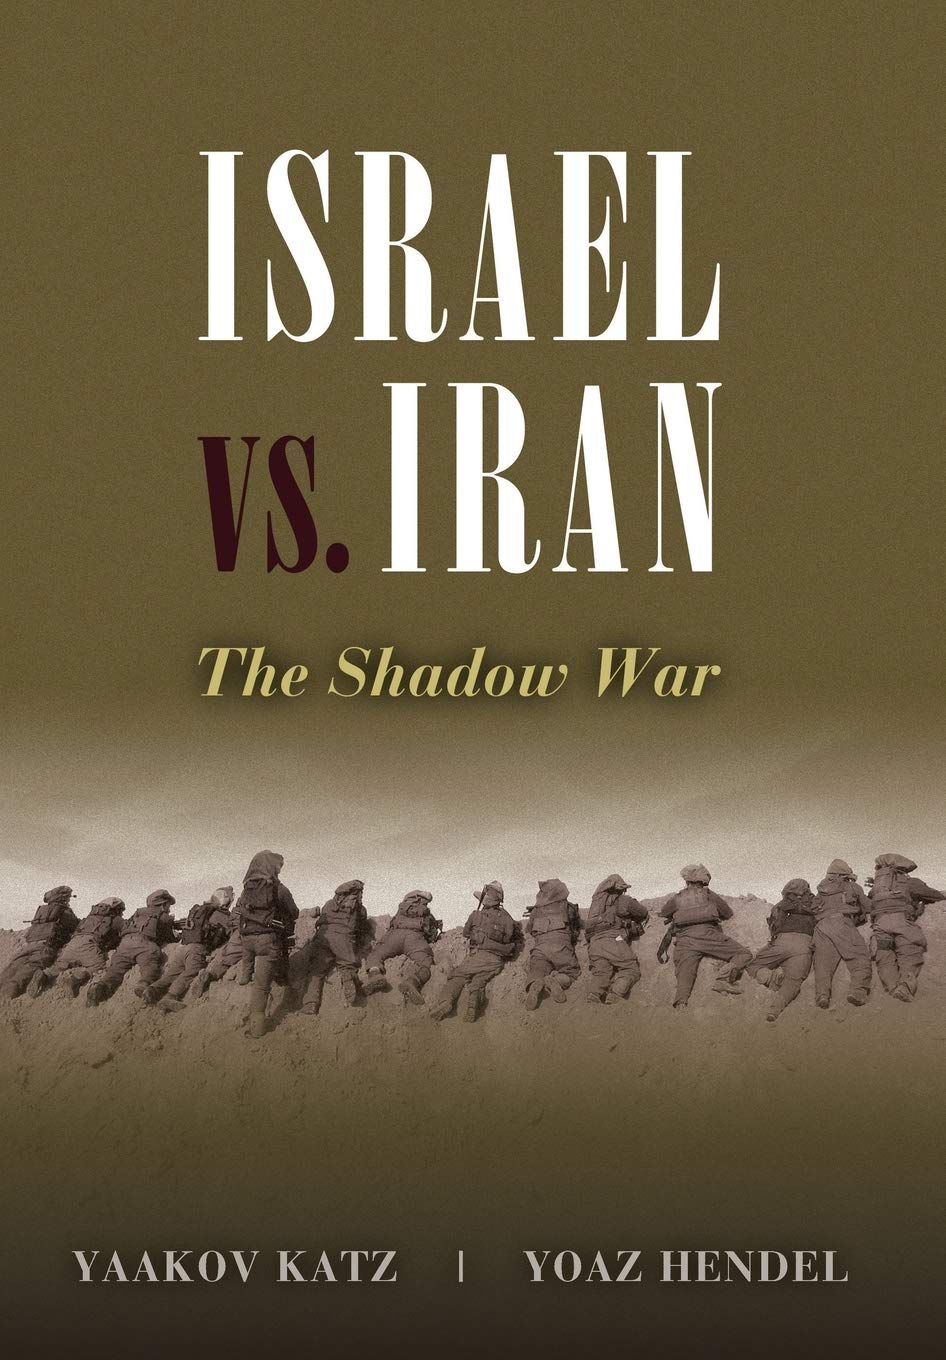 Israel vs. Iran: The Shadow War: Katz, Yaakov, Hendel, Yoaz: 9781597976688:  Amazon.com: Books